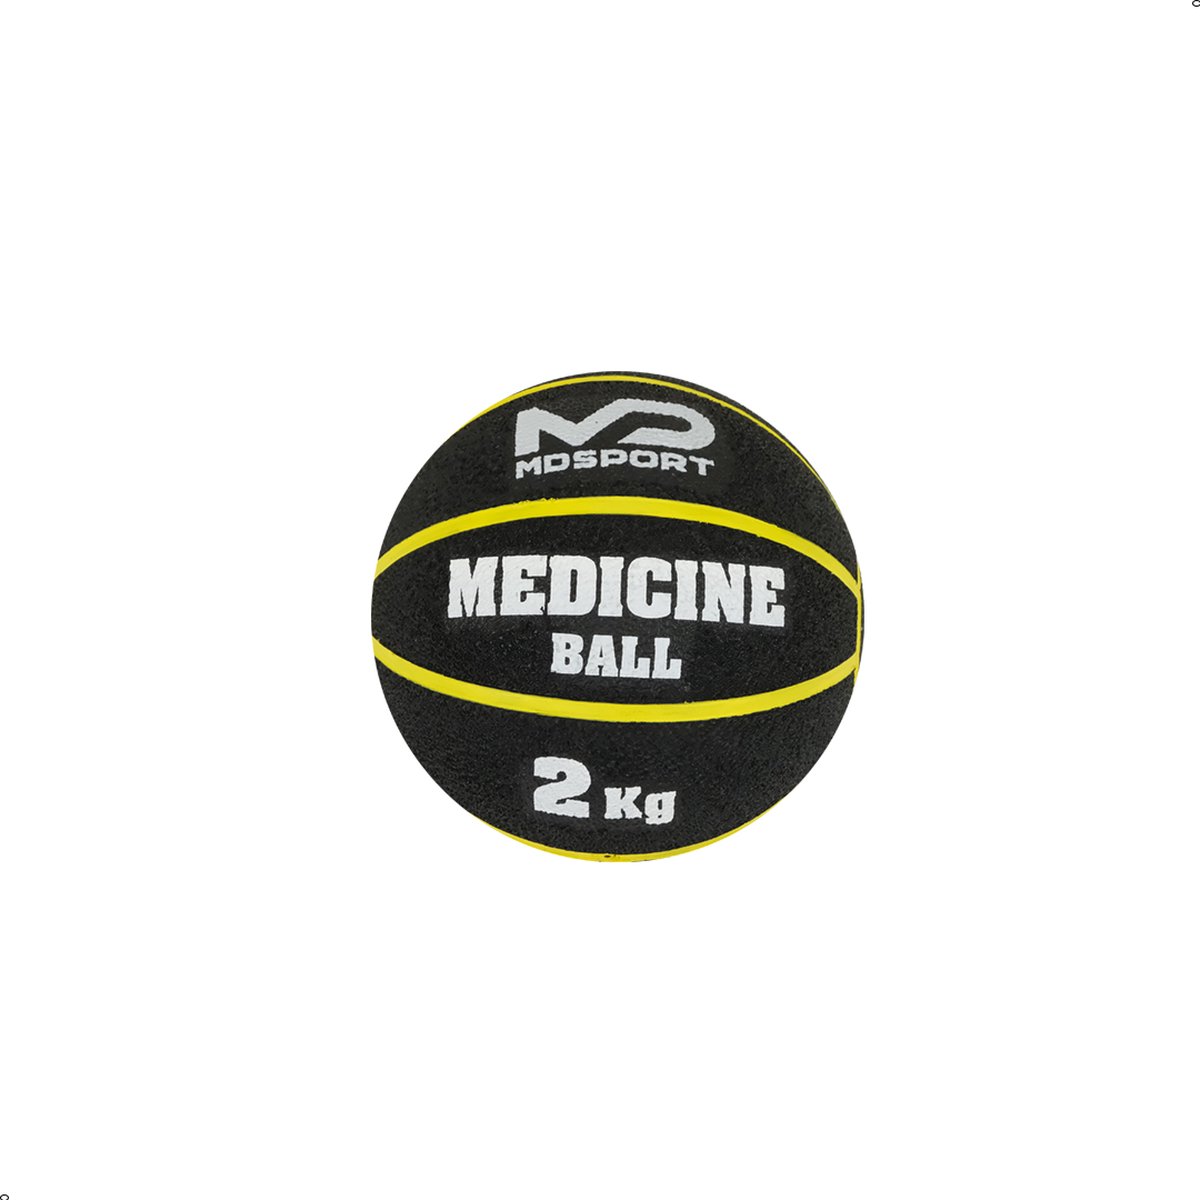 Medicijnbal 2KG - Medicinebal 2KG - Rubber - Top kwaliteit - Zwart/Geel